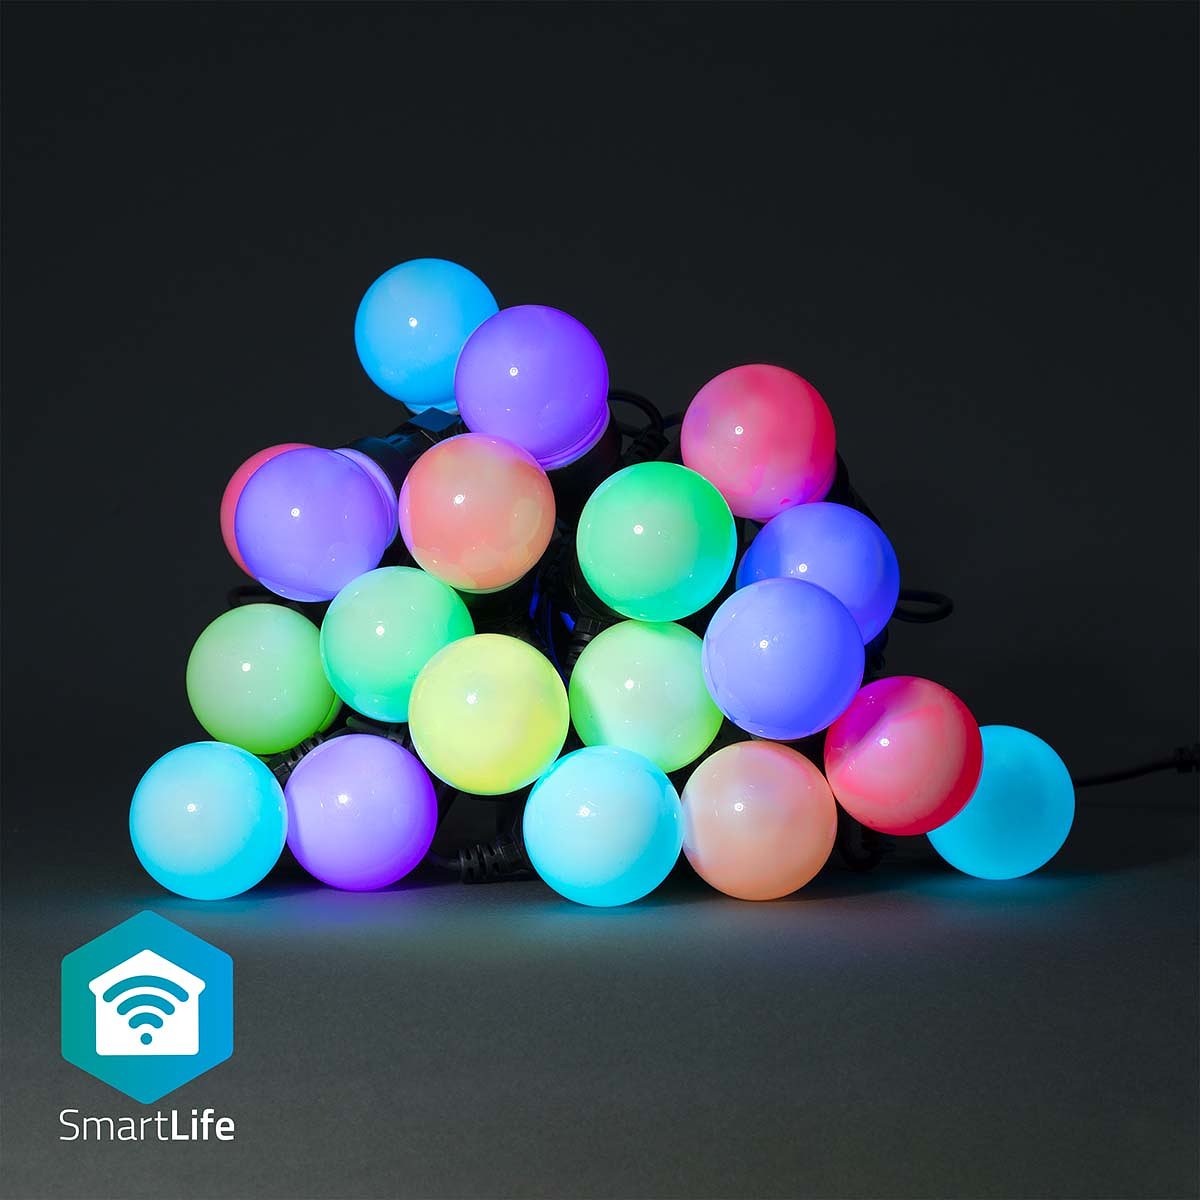 Nedis SmartLife Decoratieve LED | Wi-Fi | RGB | 20 LED's | 10 m | Android / IOS